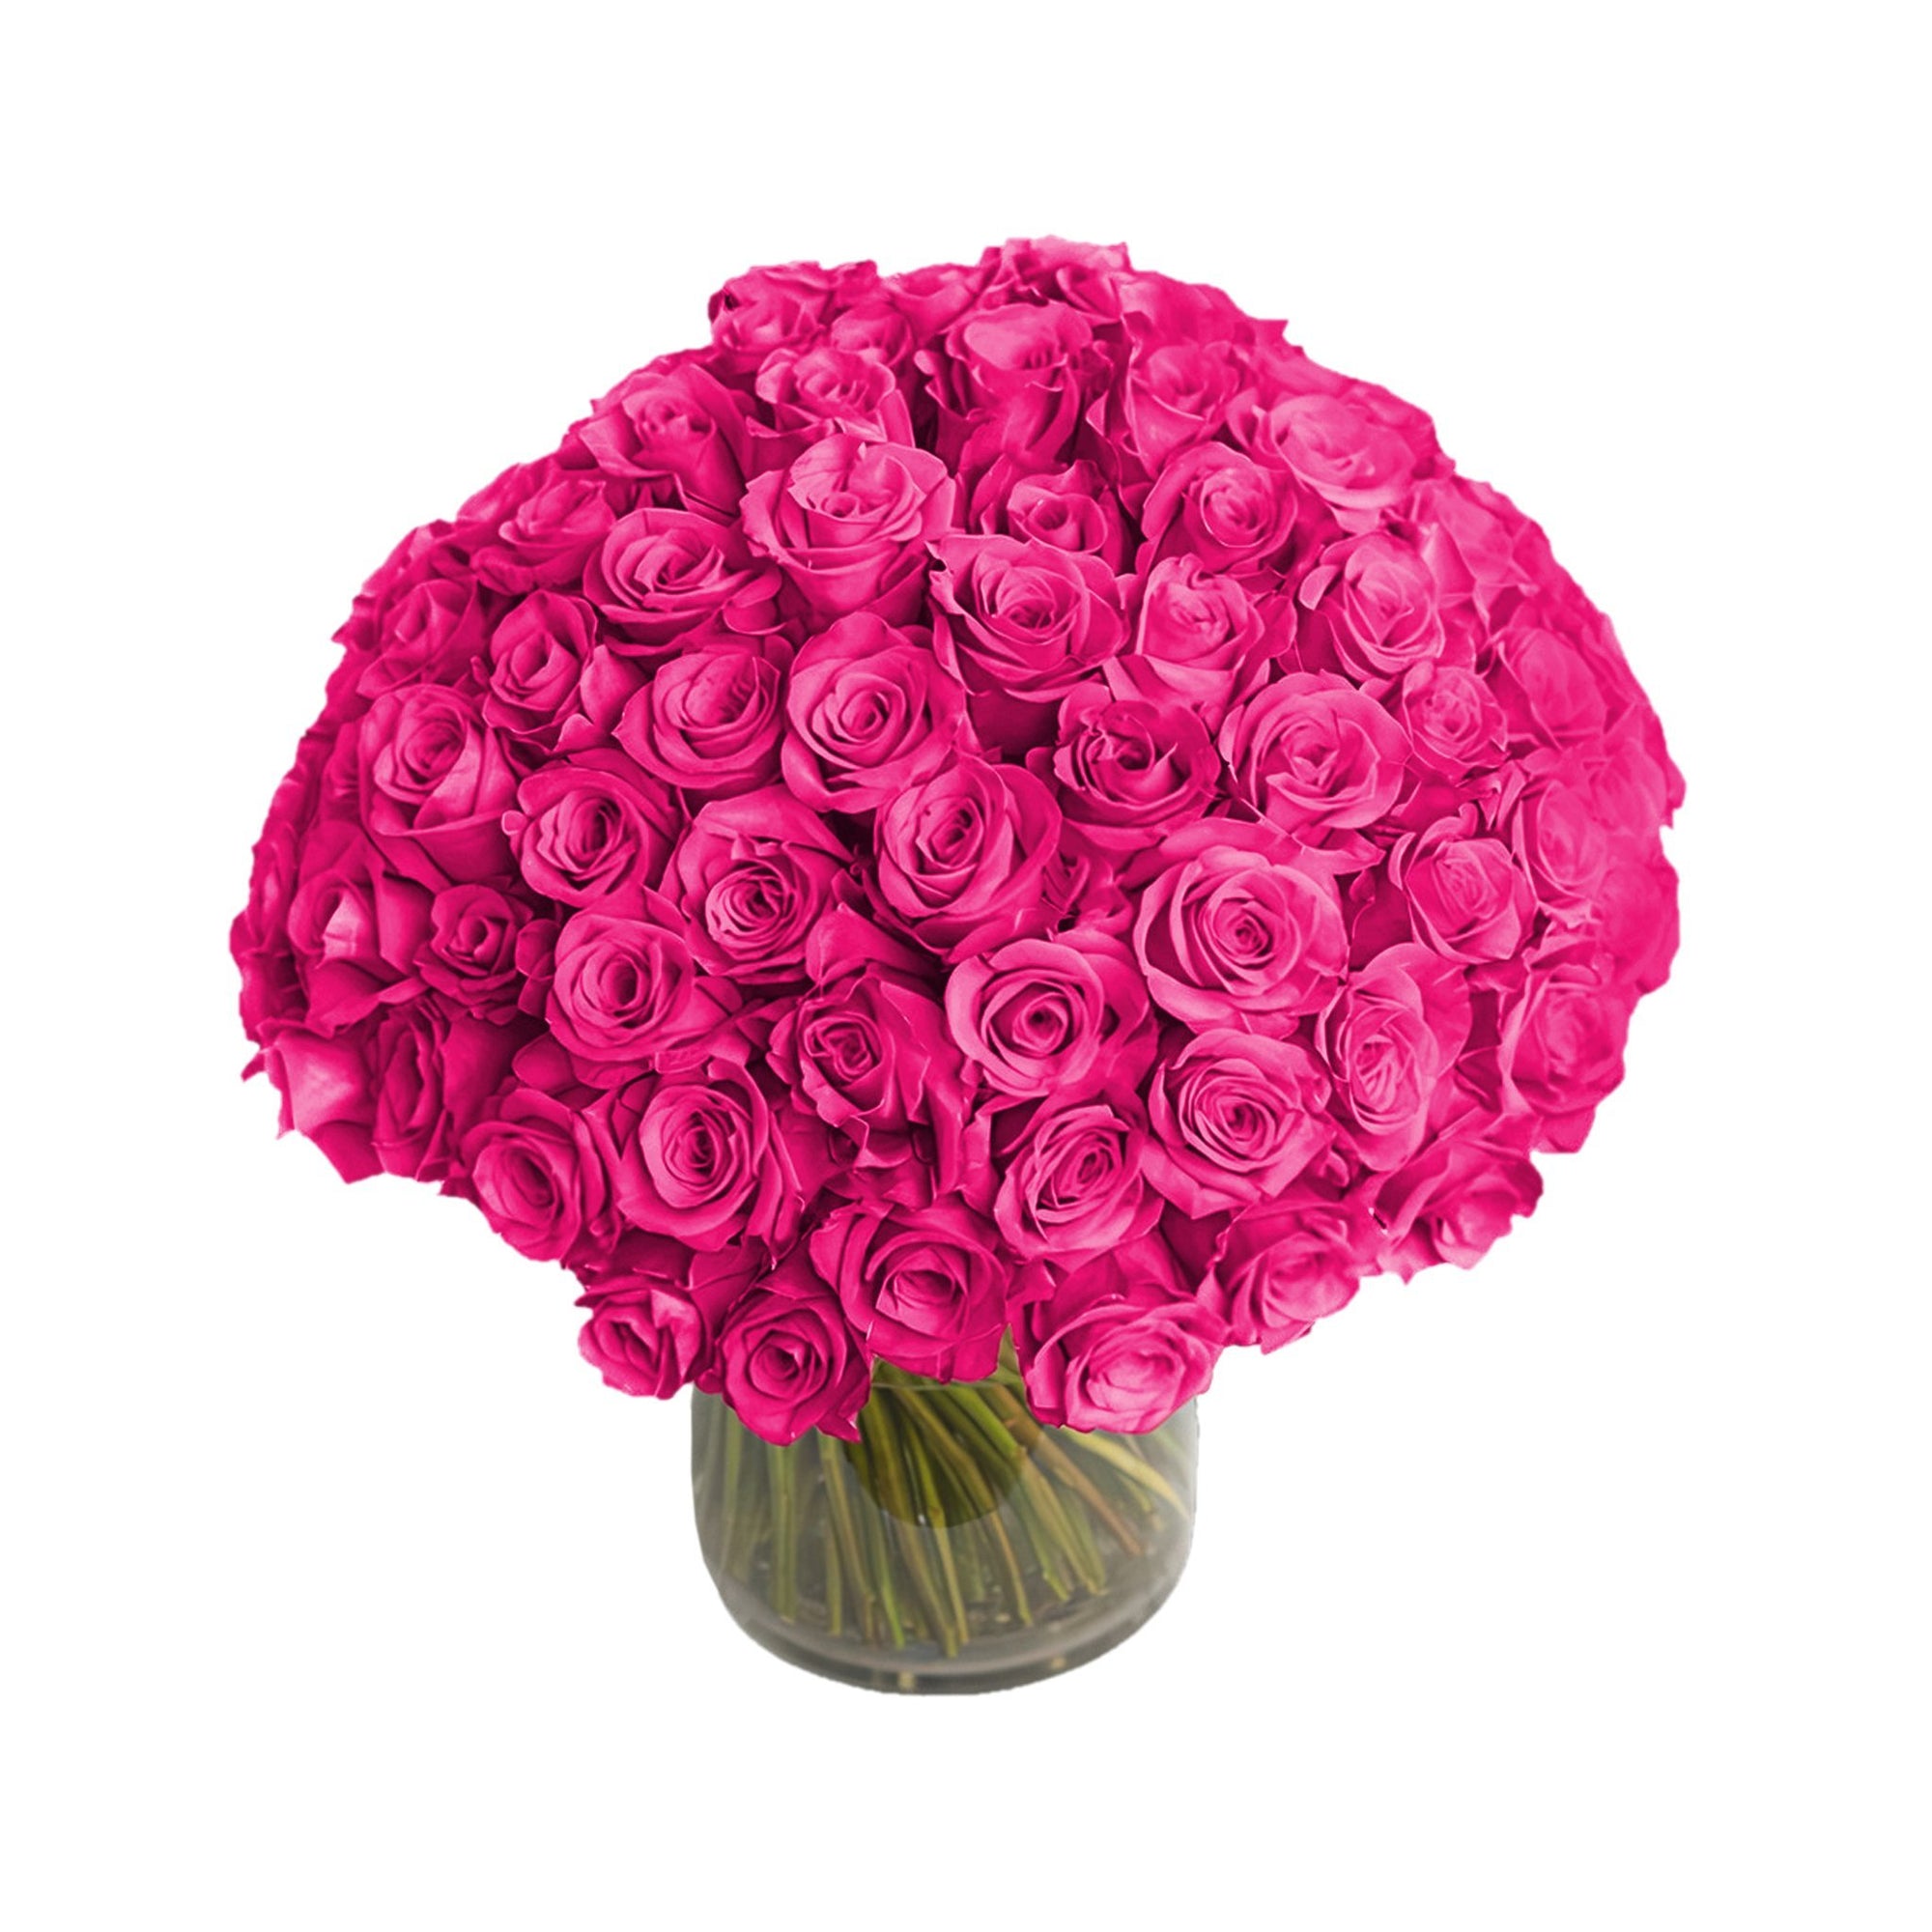 Manhattan Flower Delivery - Fresh Roses in a Vase | 100 Hot Pink Roses - Roses